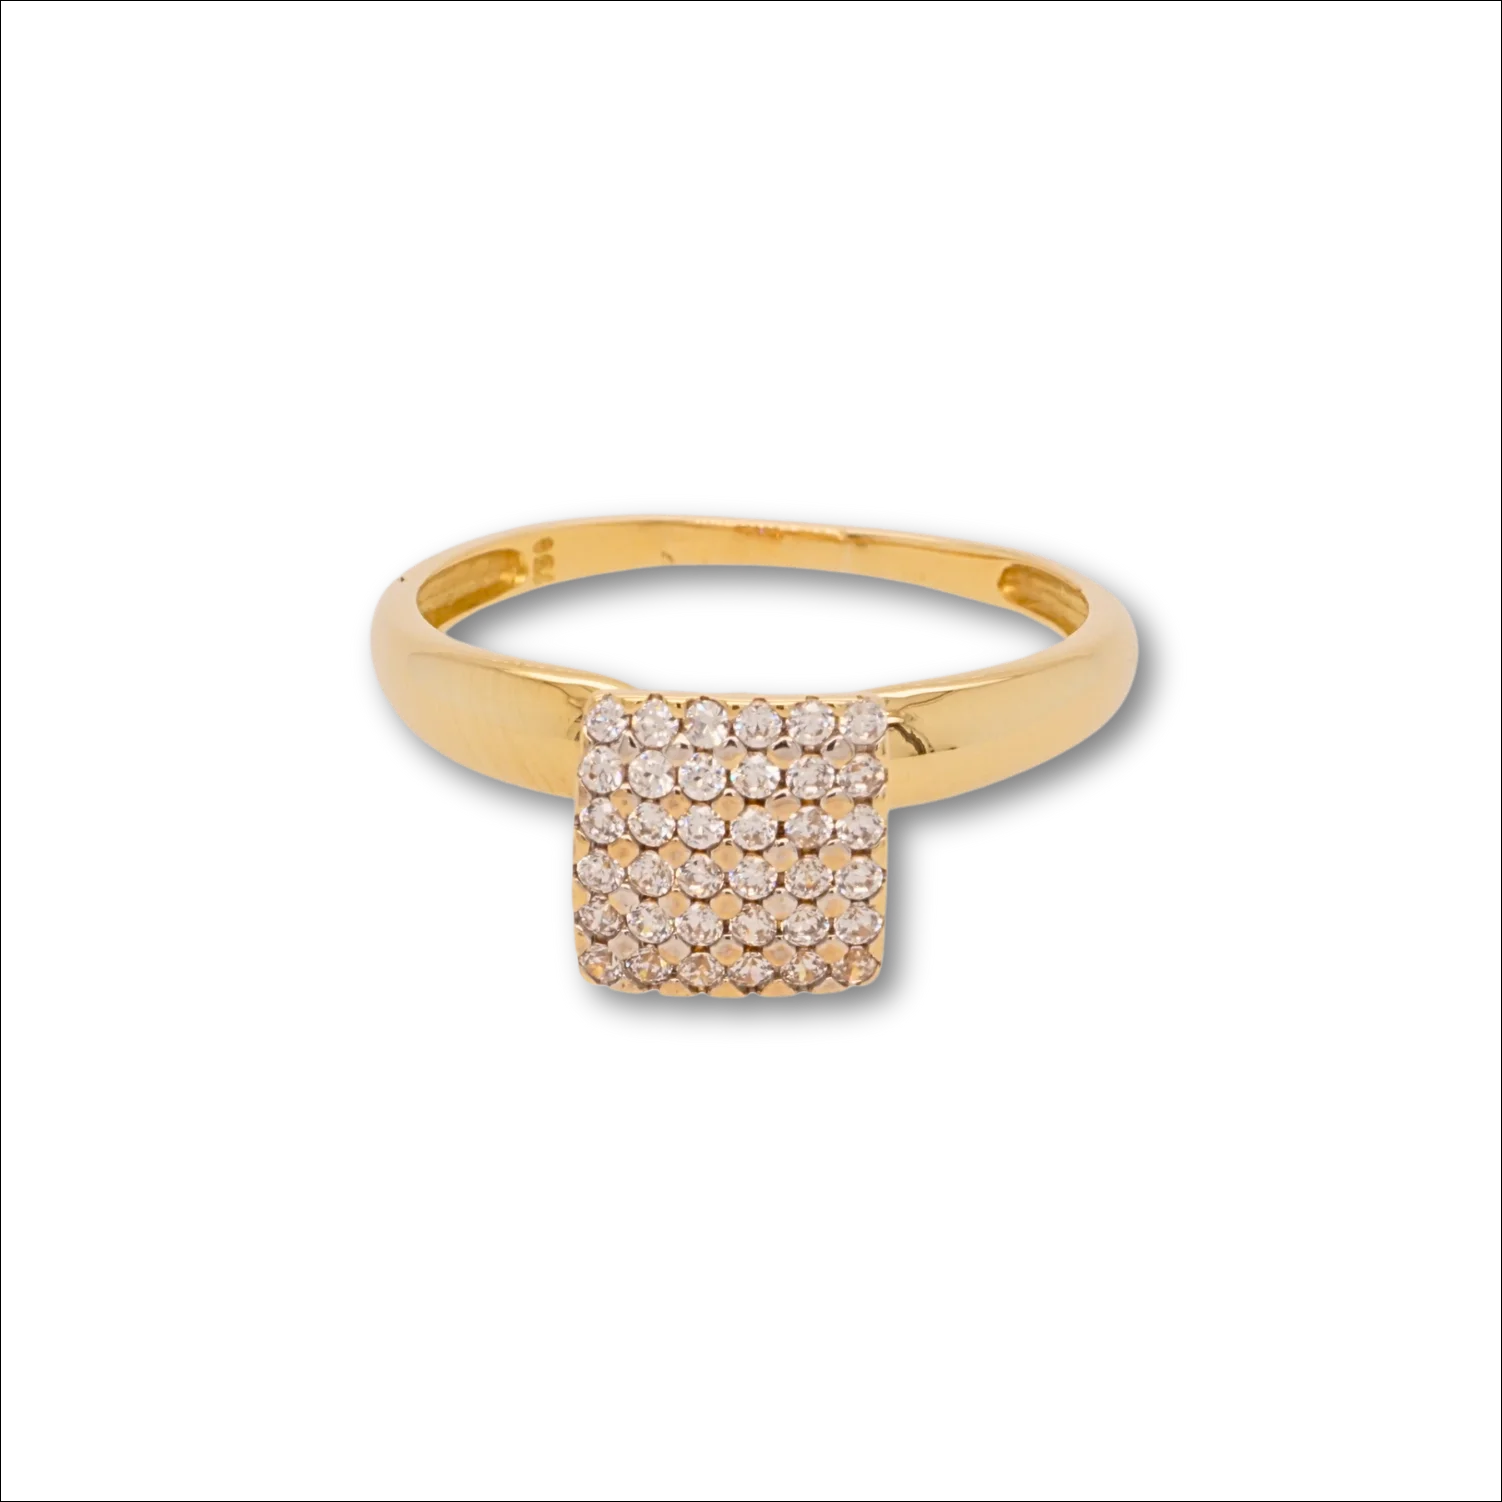 Elegant 18k gold cz square ring | Rings